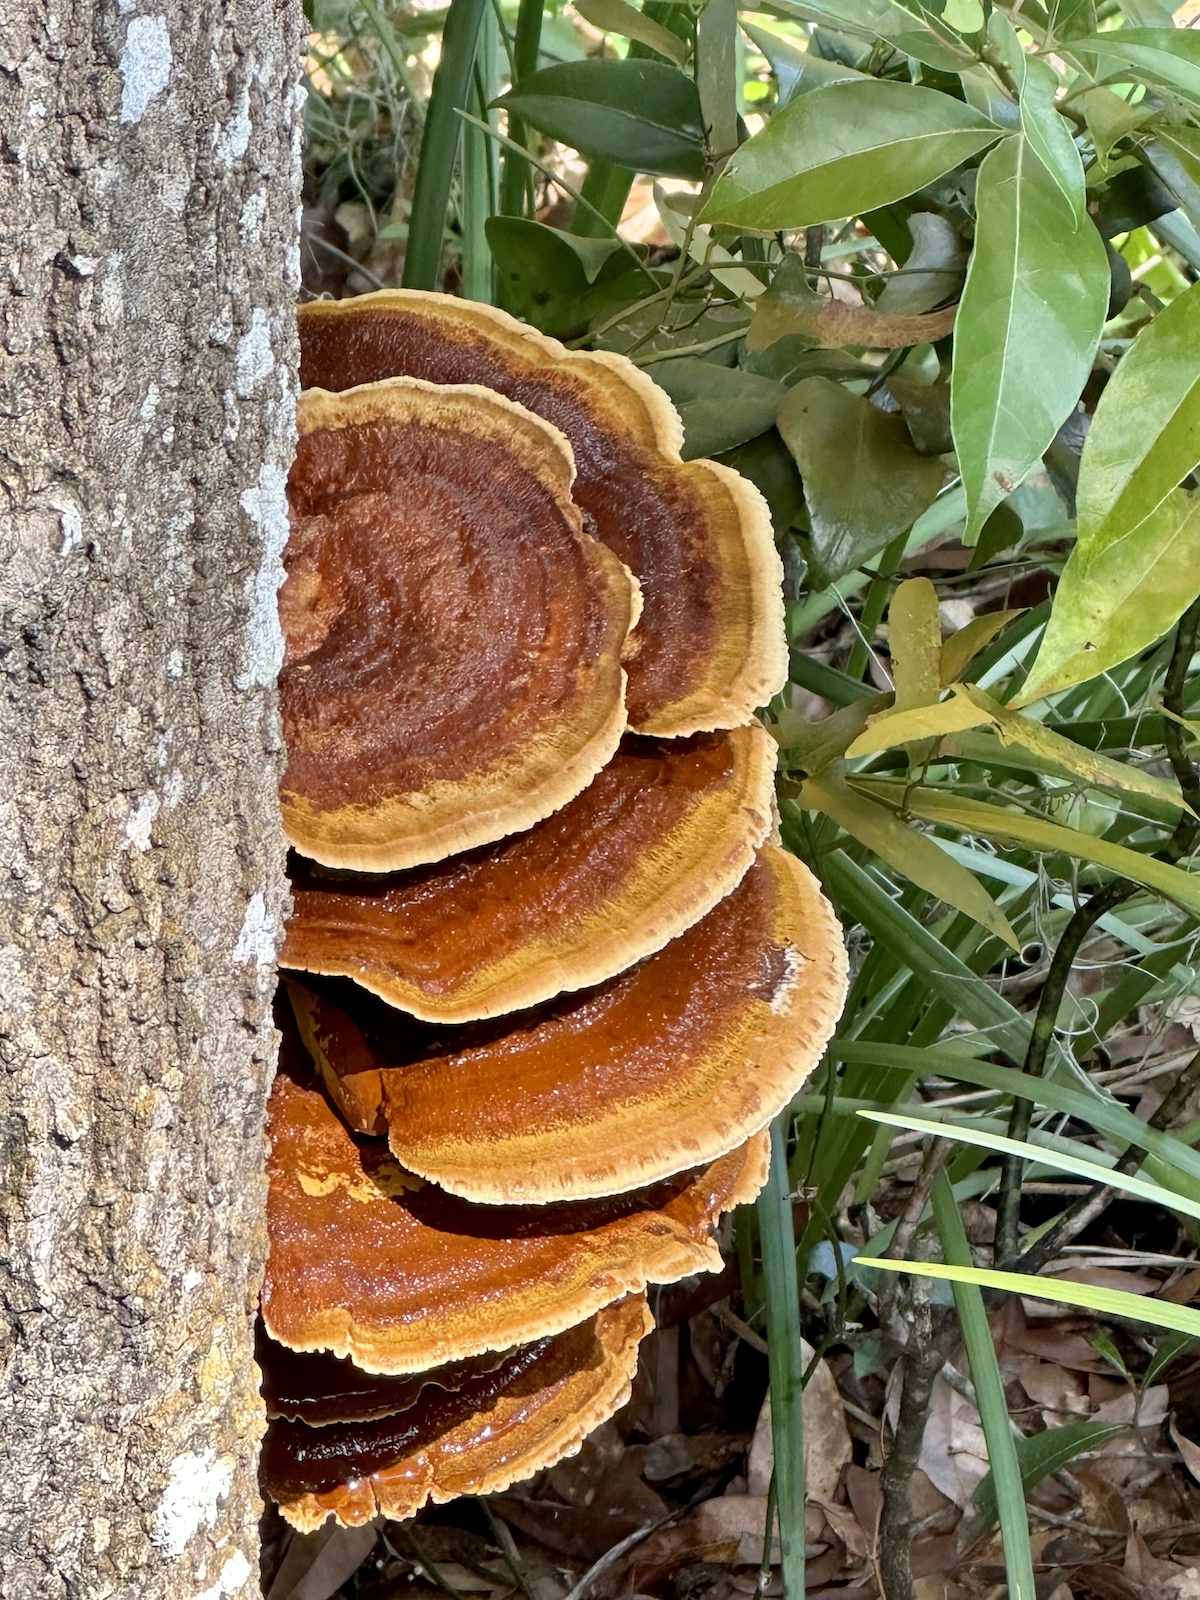 Shelf fungus growing in SE Ocala